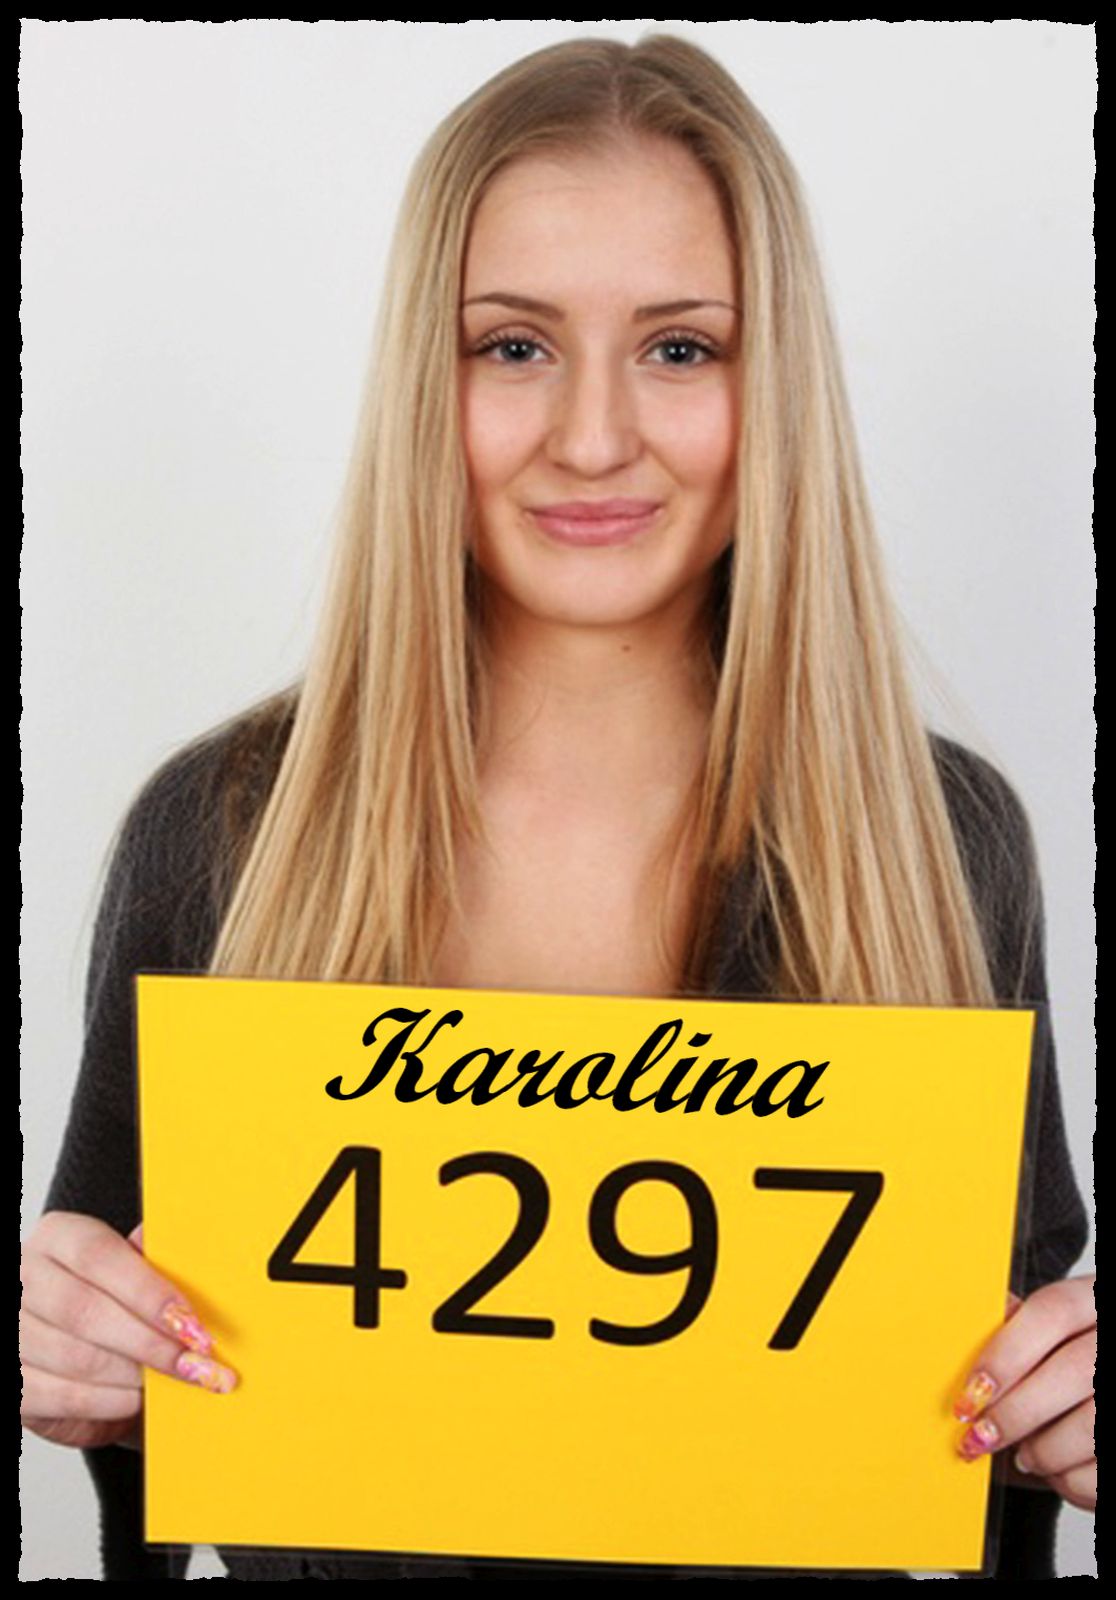 Czech Casting 04 4297 Karolina 1 Porn Pic Eporner